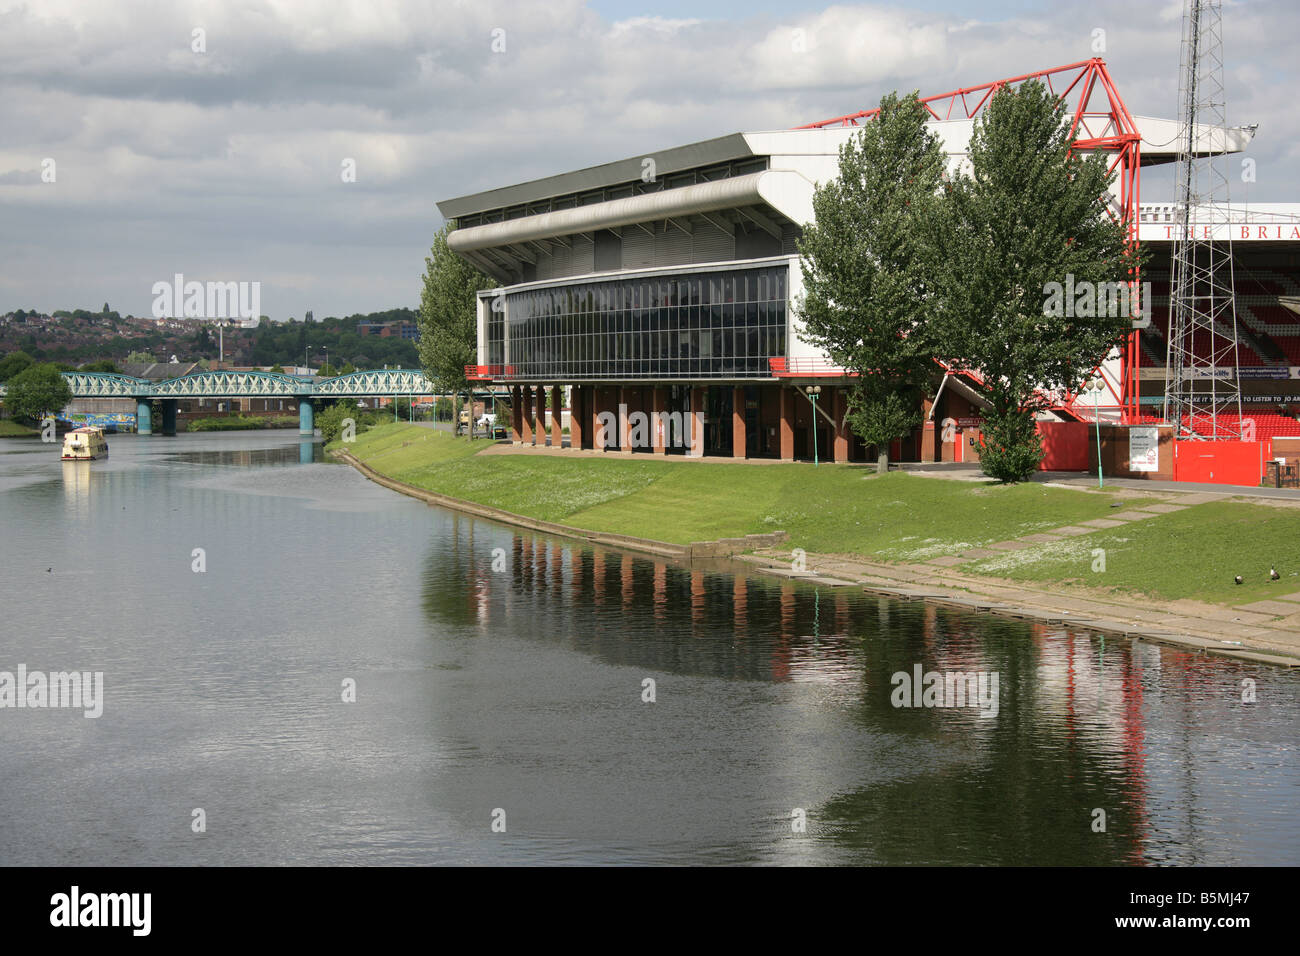 Ciudad de Nottingham, Inglaterra. El Nottingham Forest Football Club NFFC Stadium en Meadow Lane, a orillas del río Trent. Foto de stock